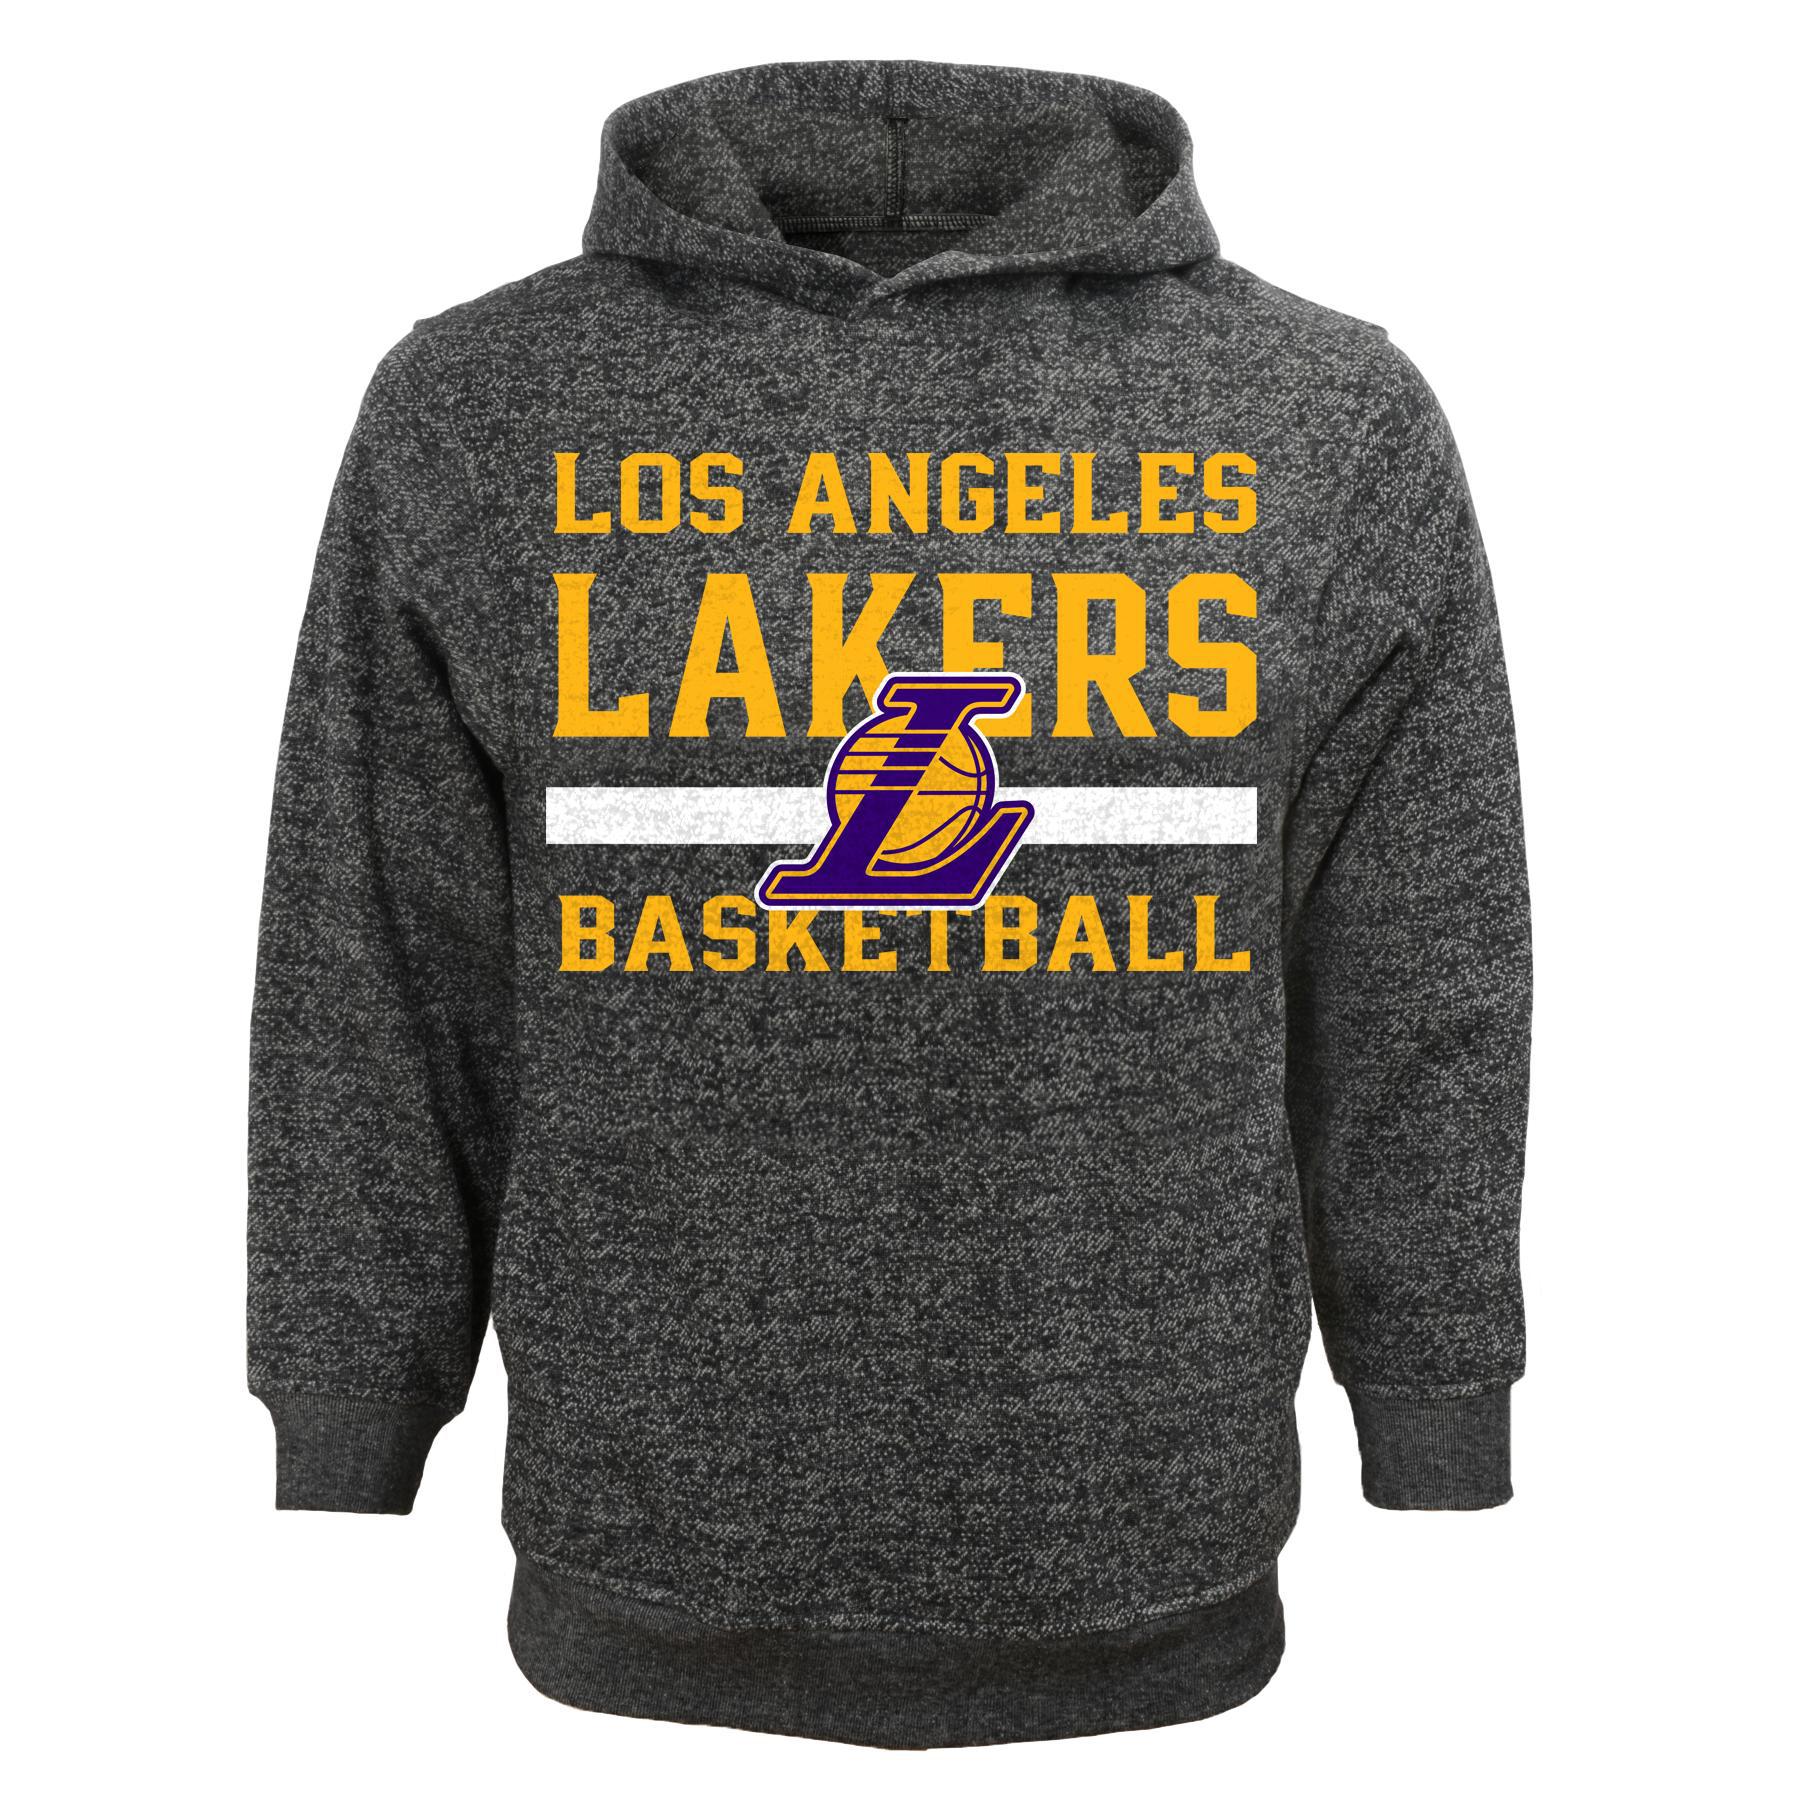 NBA Boys' Hooded Sweatshirt - Los Angeles Lakers